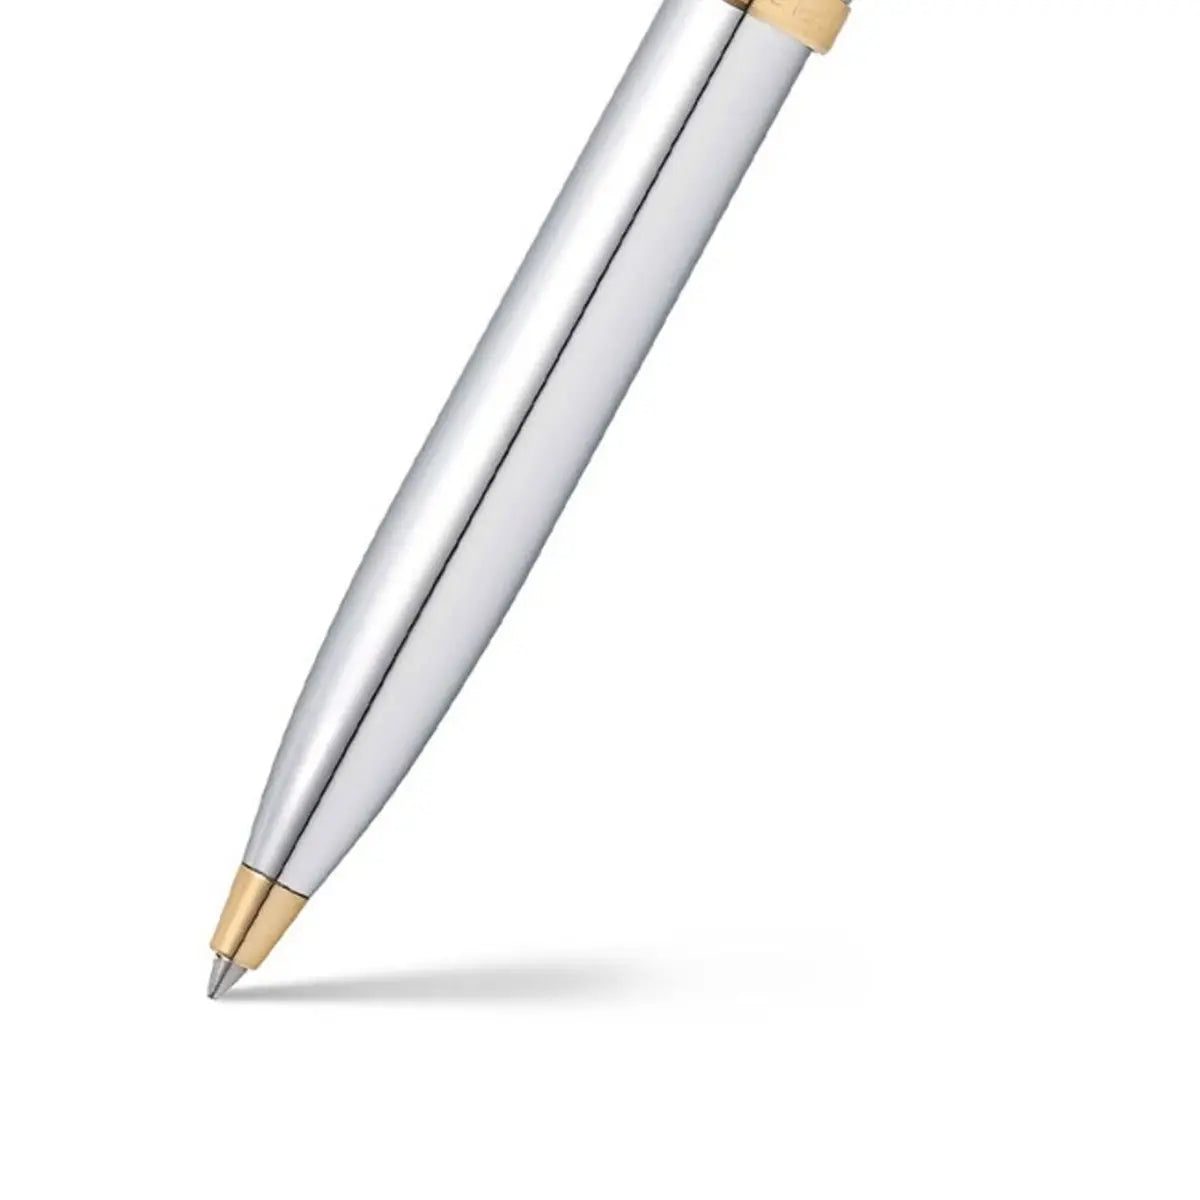 Sheaffer® Gift Set ft. Bright Chrome S100 9340 with Gold Tone Trim as Set of 2 pens -  Ballpoint Pen & Fountain pen (M)